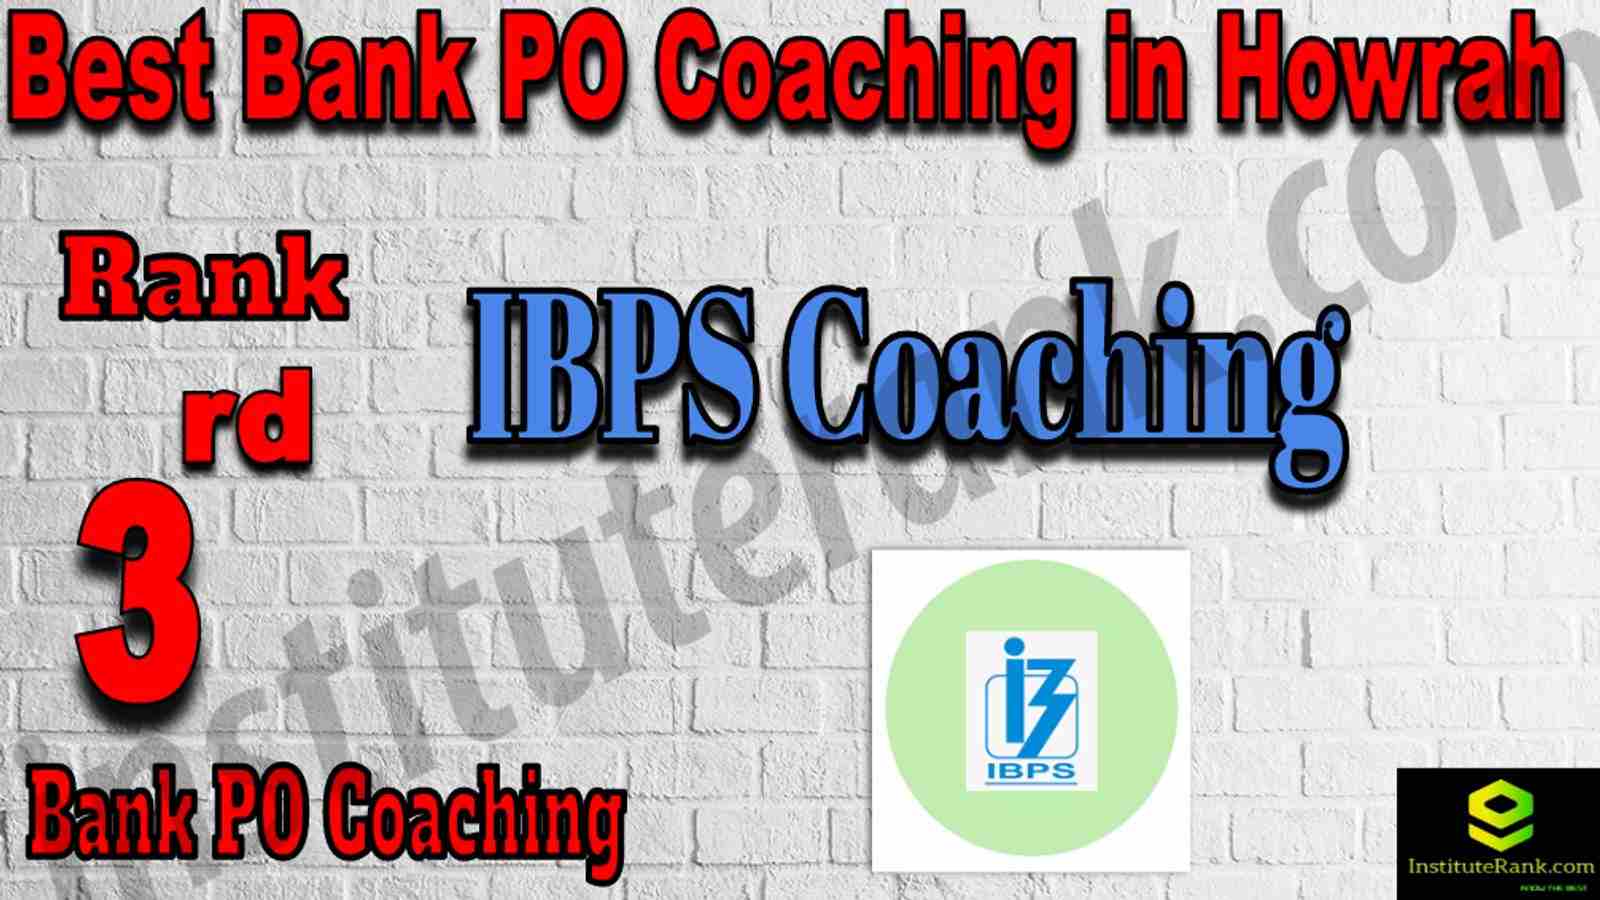 3rd Best Bank PO Coaching in Howrah